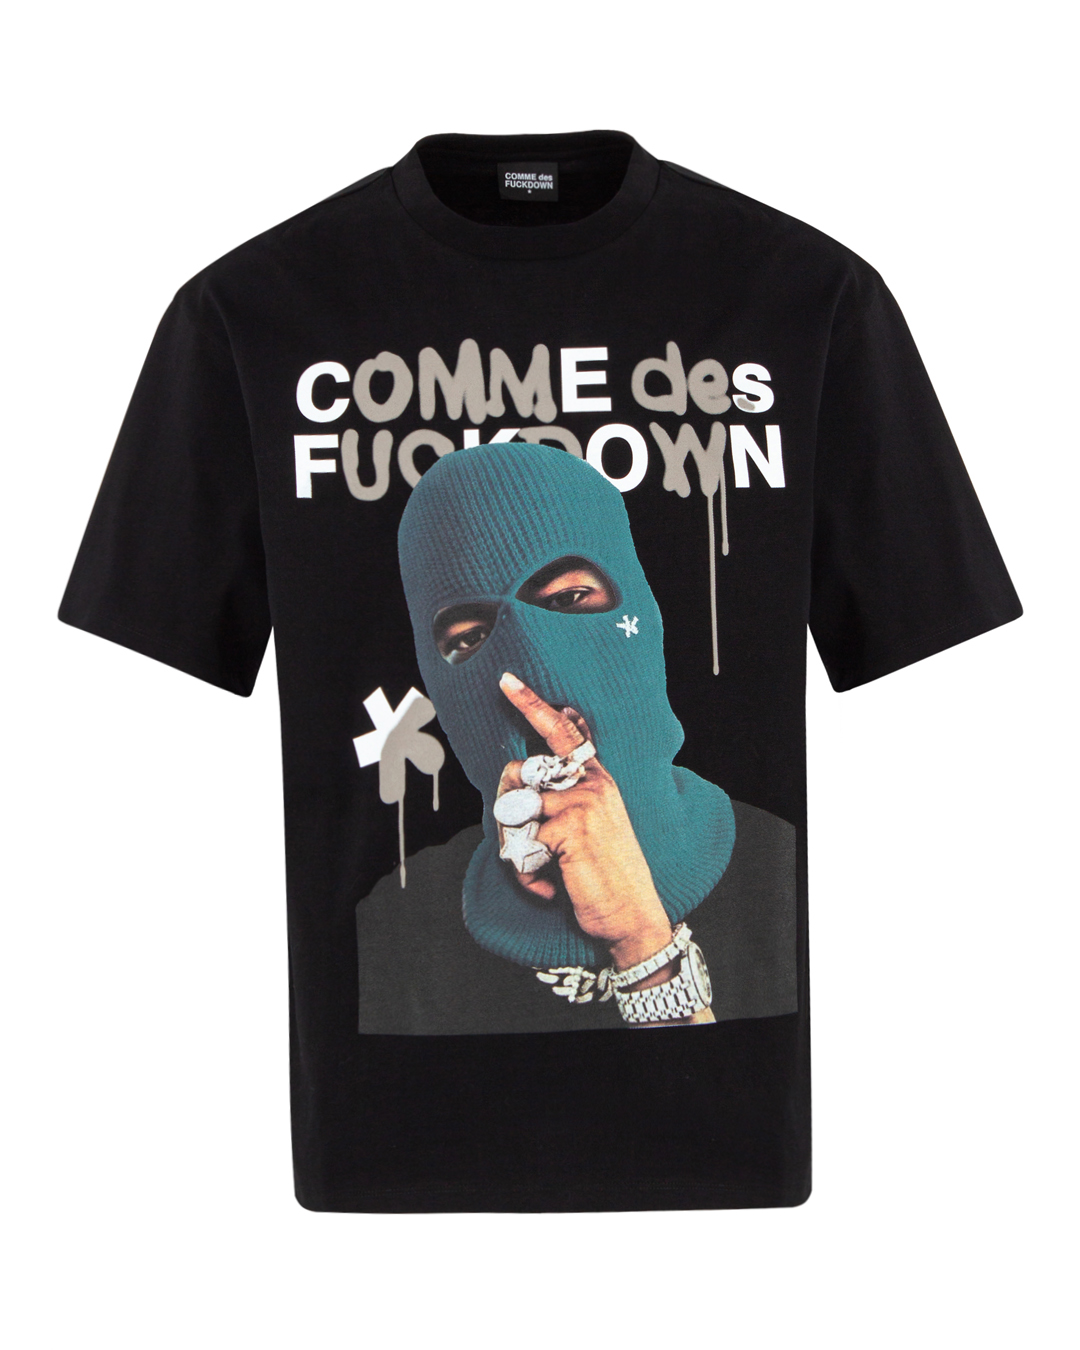 хлопковая футболка COMME des FUCKDOWN